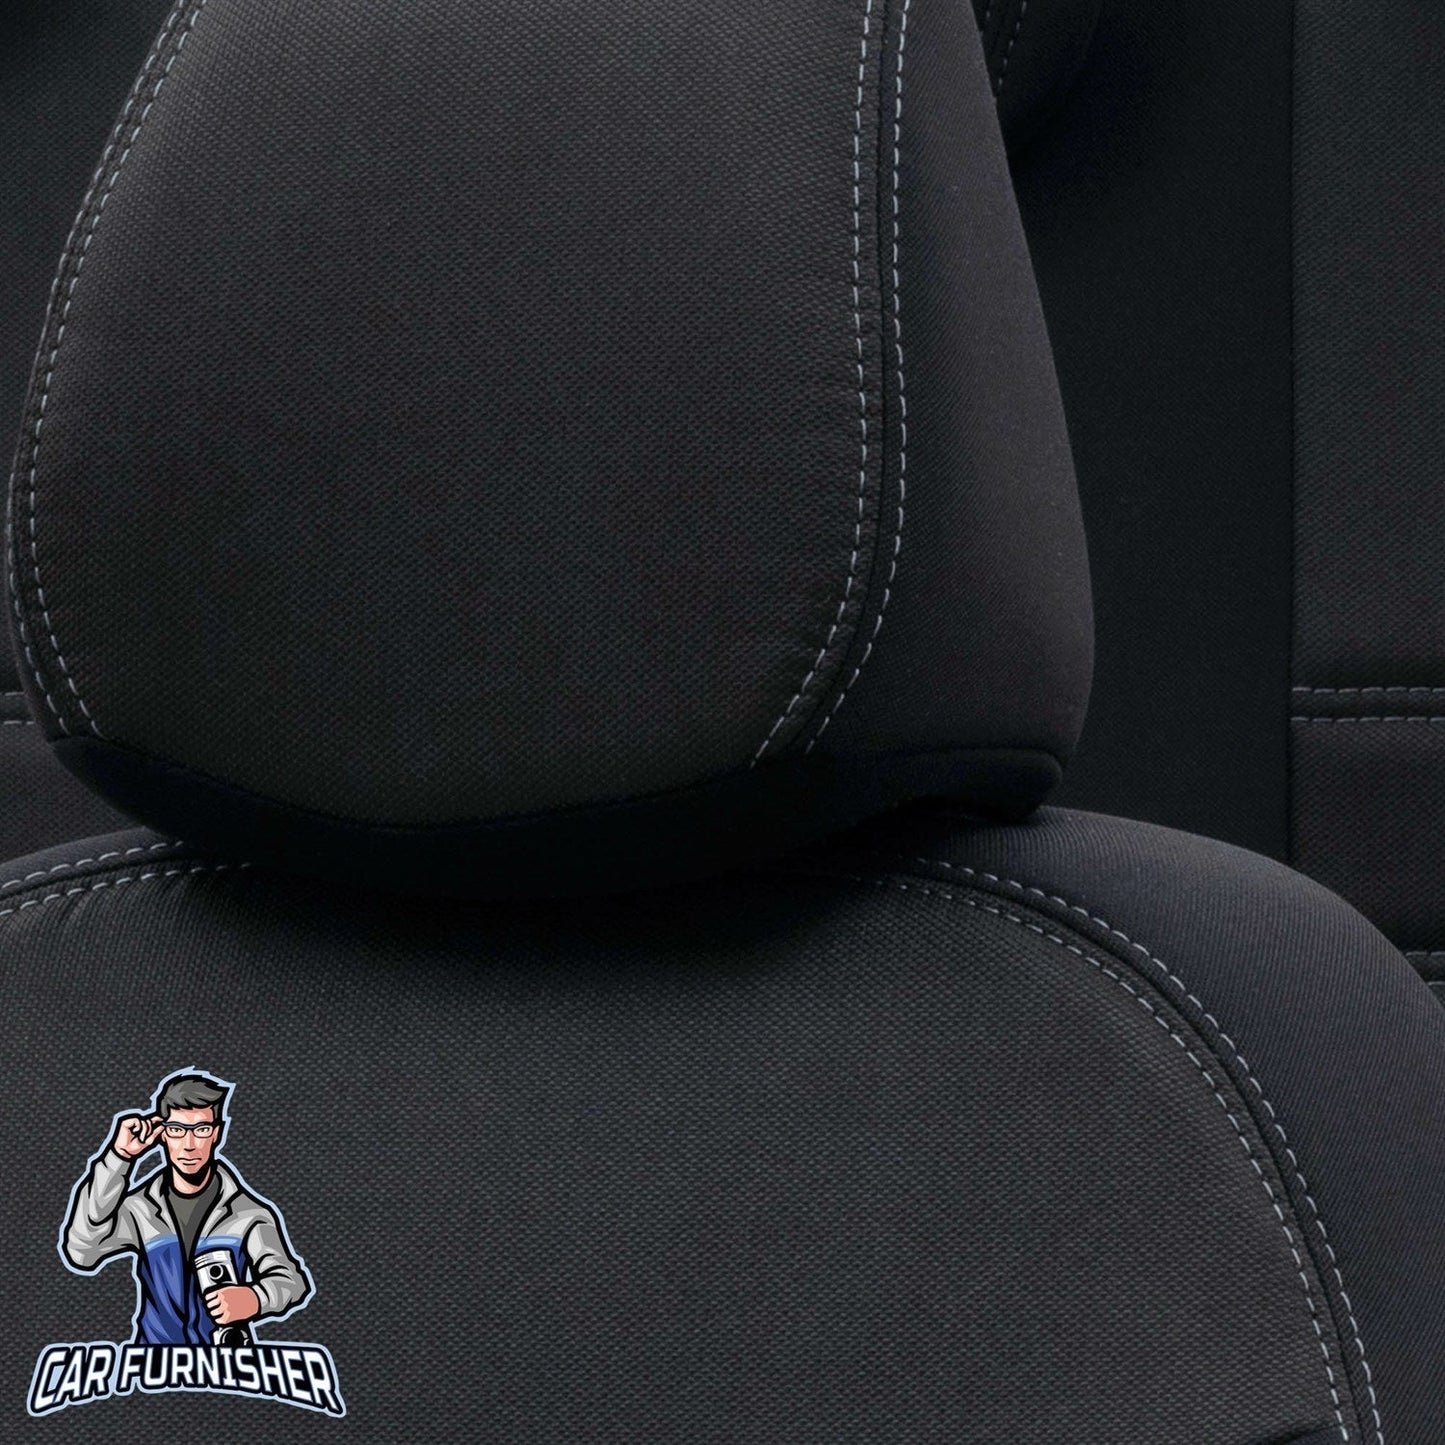 Chery Alia Seat Covers Original Jacquard Design Black Jacquard Fabric